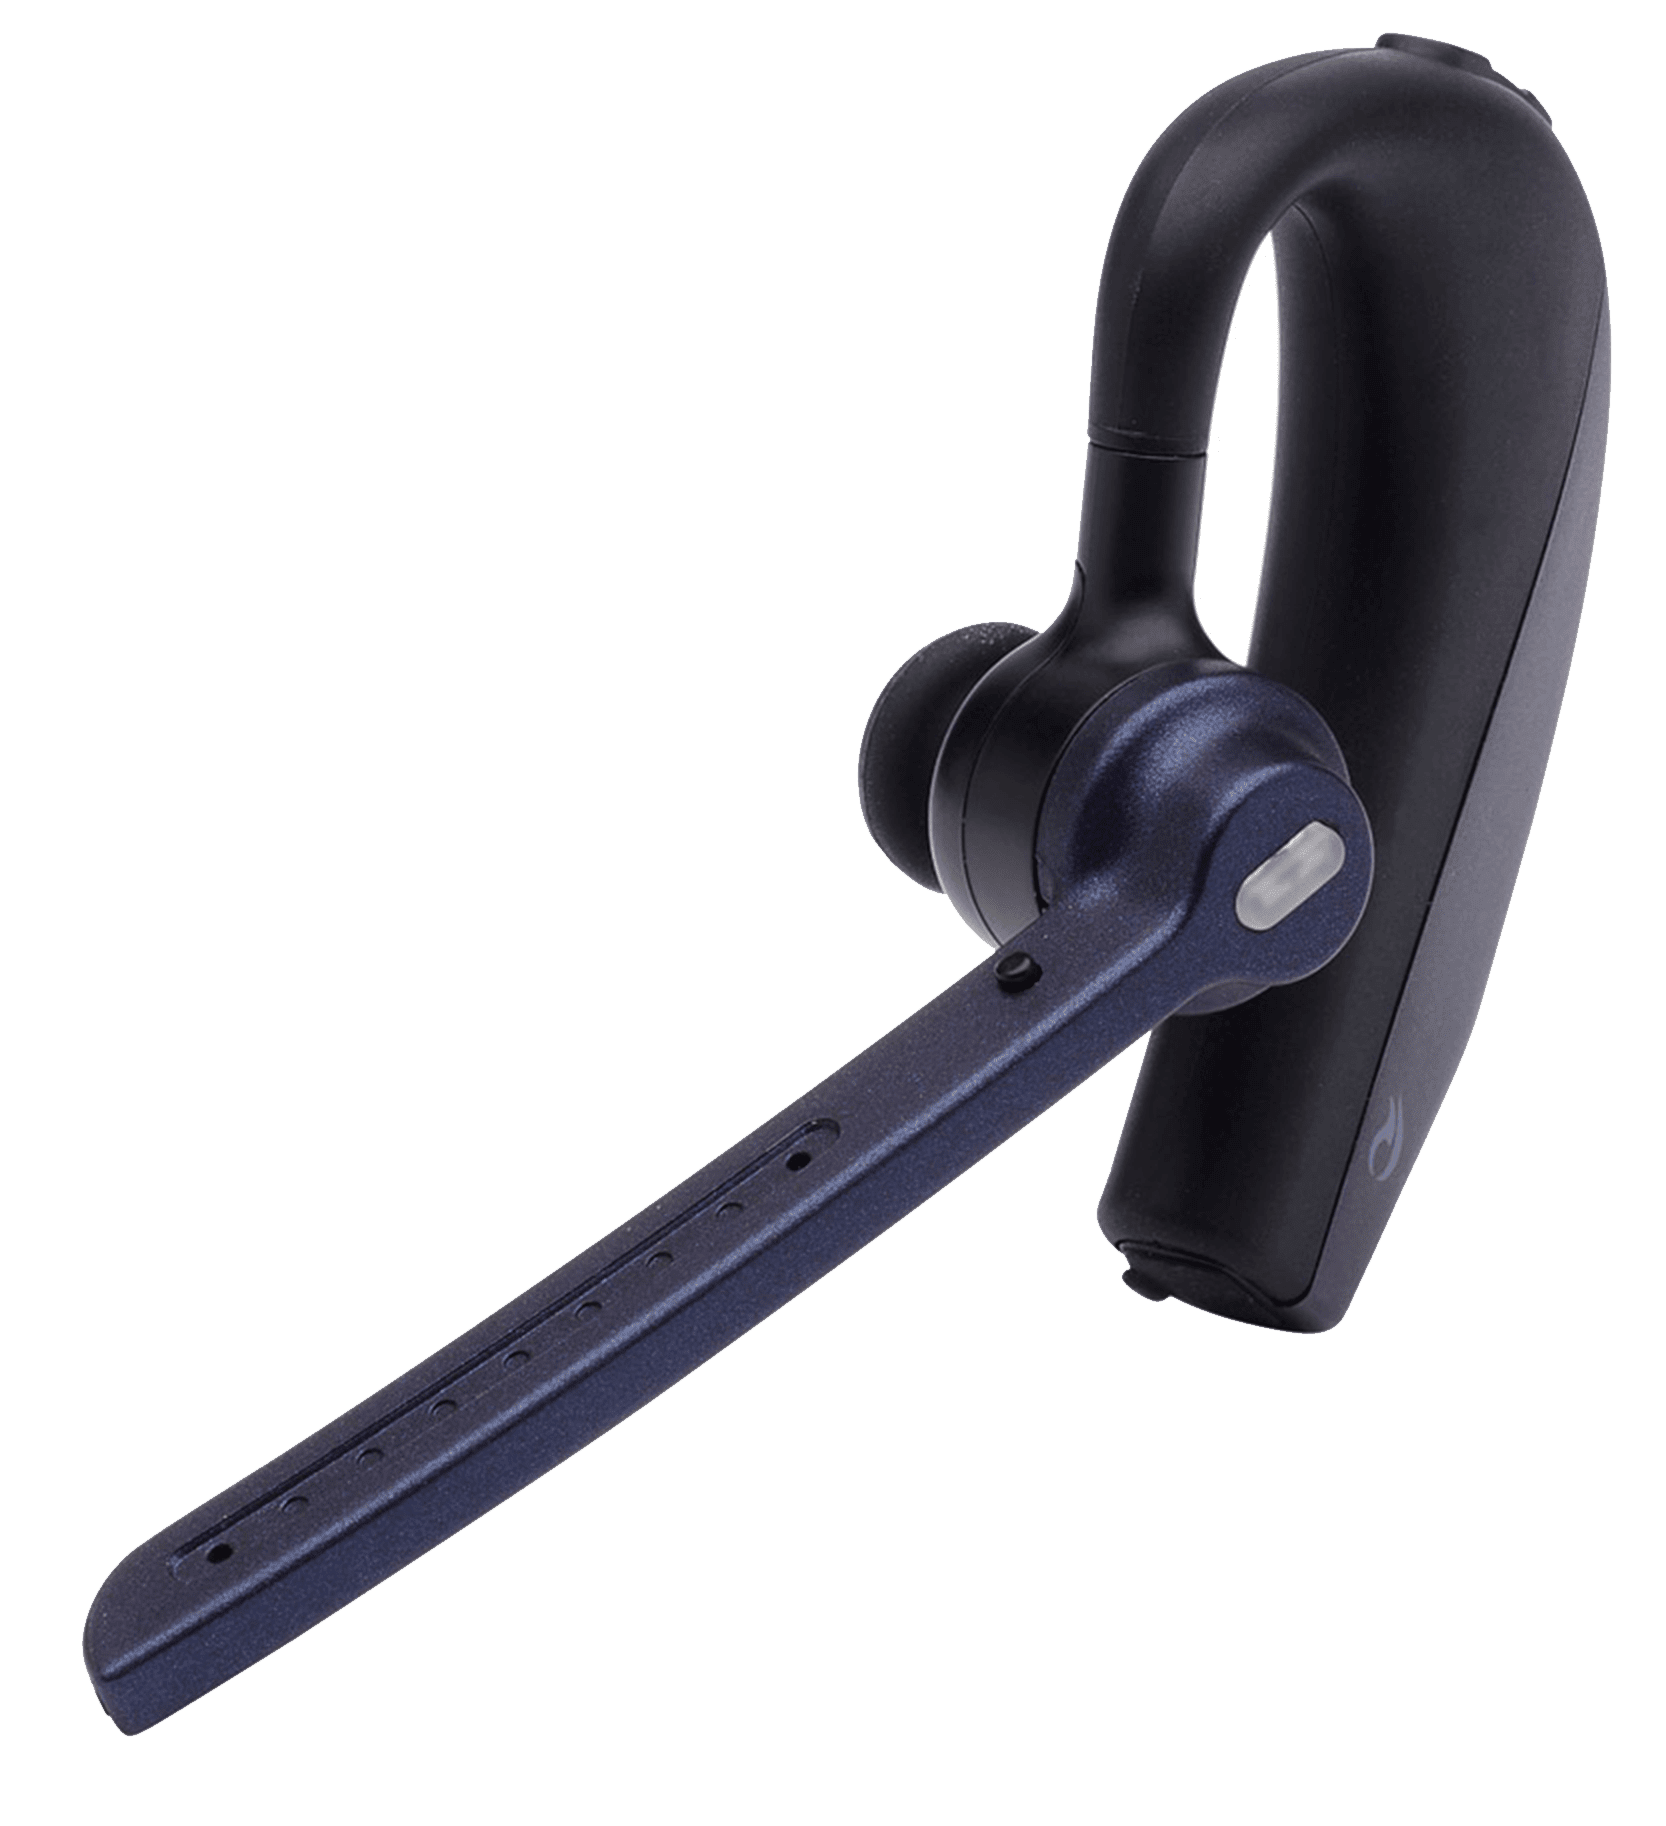 Nuance-Dragon-Bluetooth-Wireless-Headset-II